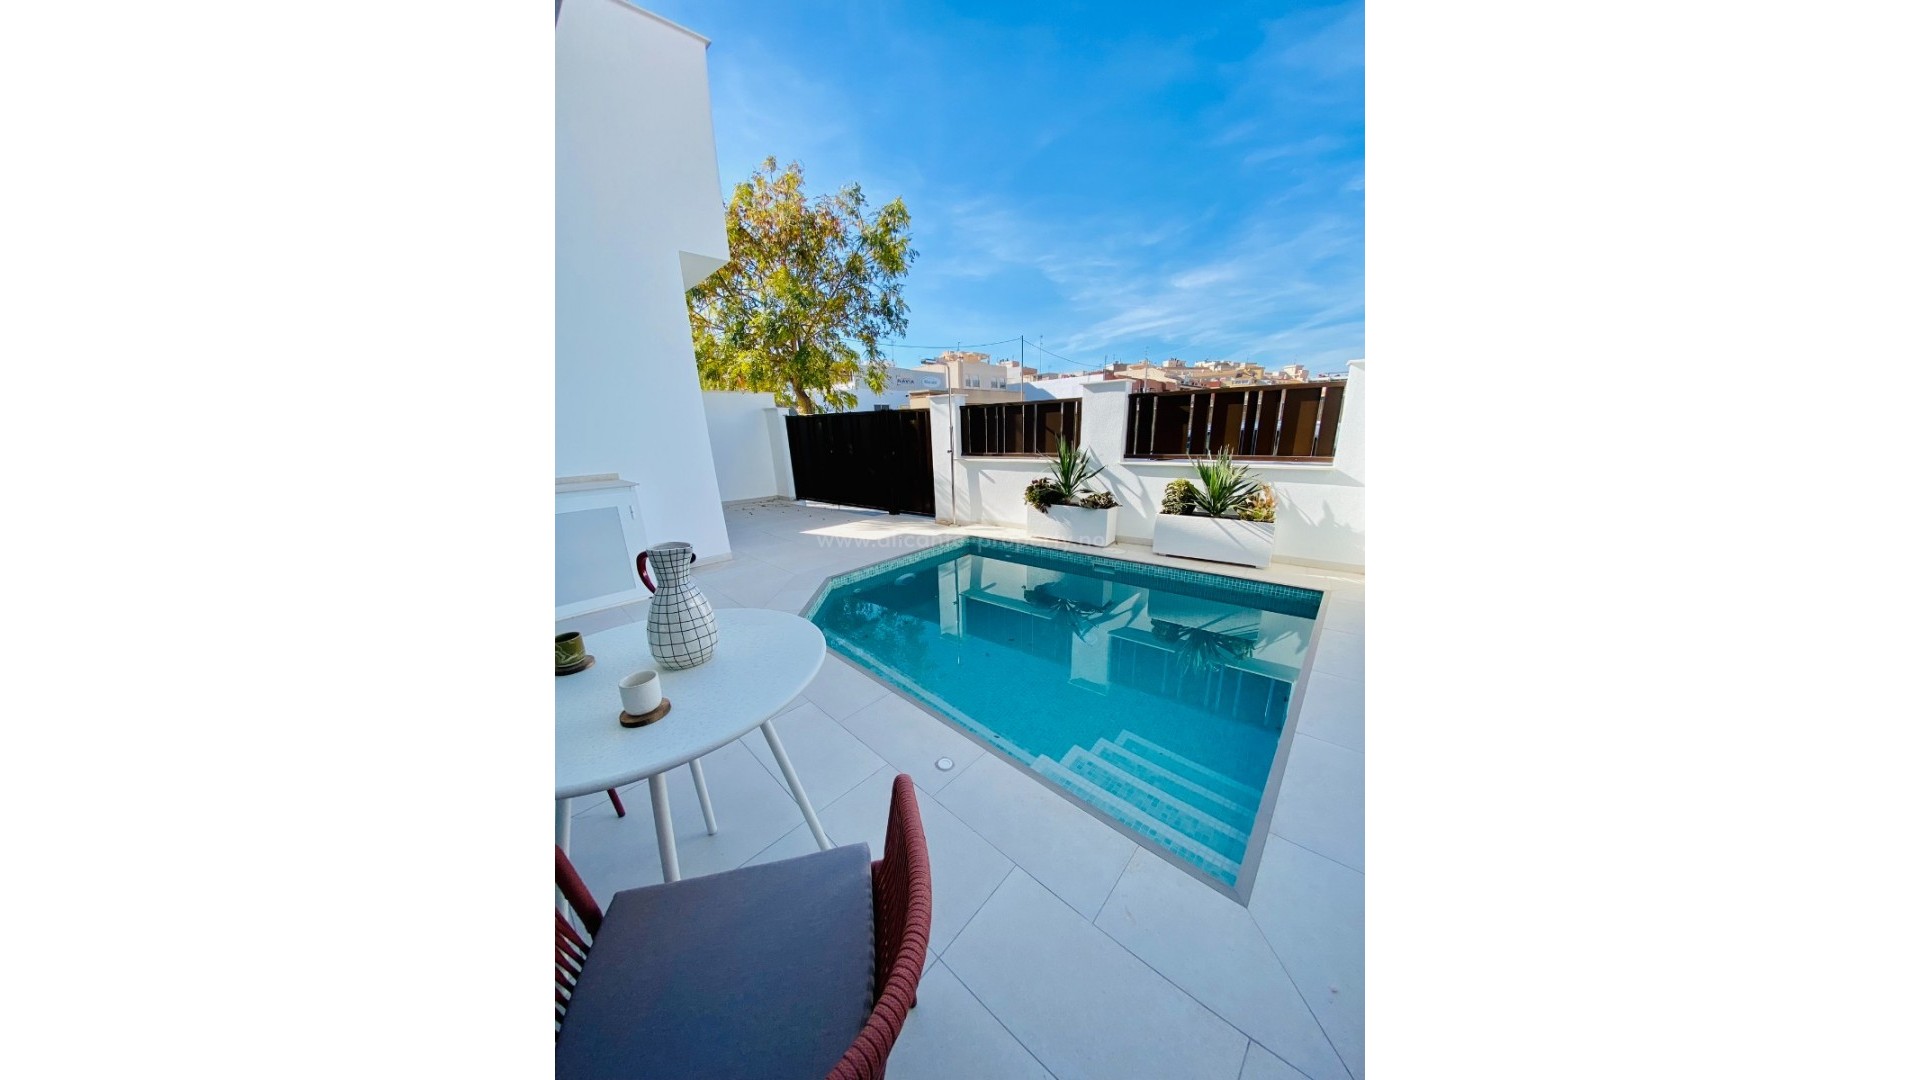 Exclusive residential complex of flats/apartments in Pilar de Horadada, 2/3 bedrooms, 2 bathrooms, large private solarium. Great shared pool